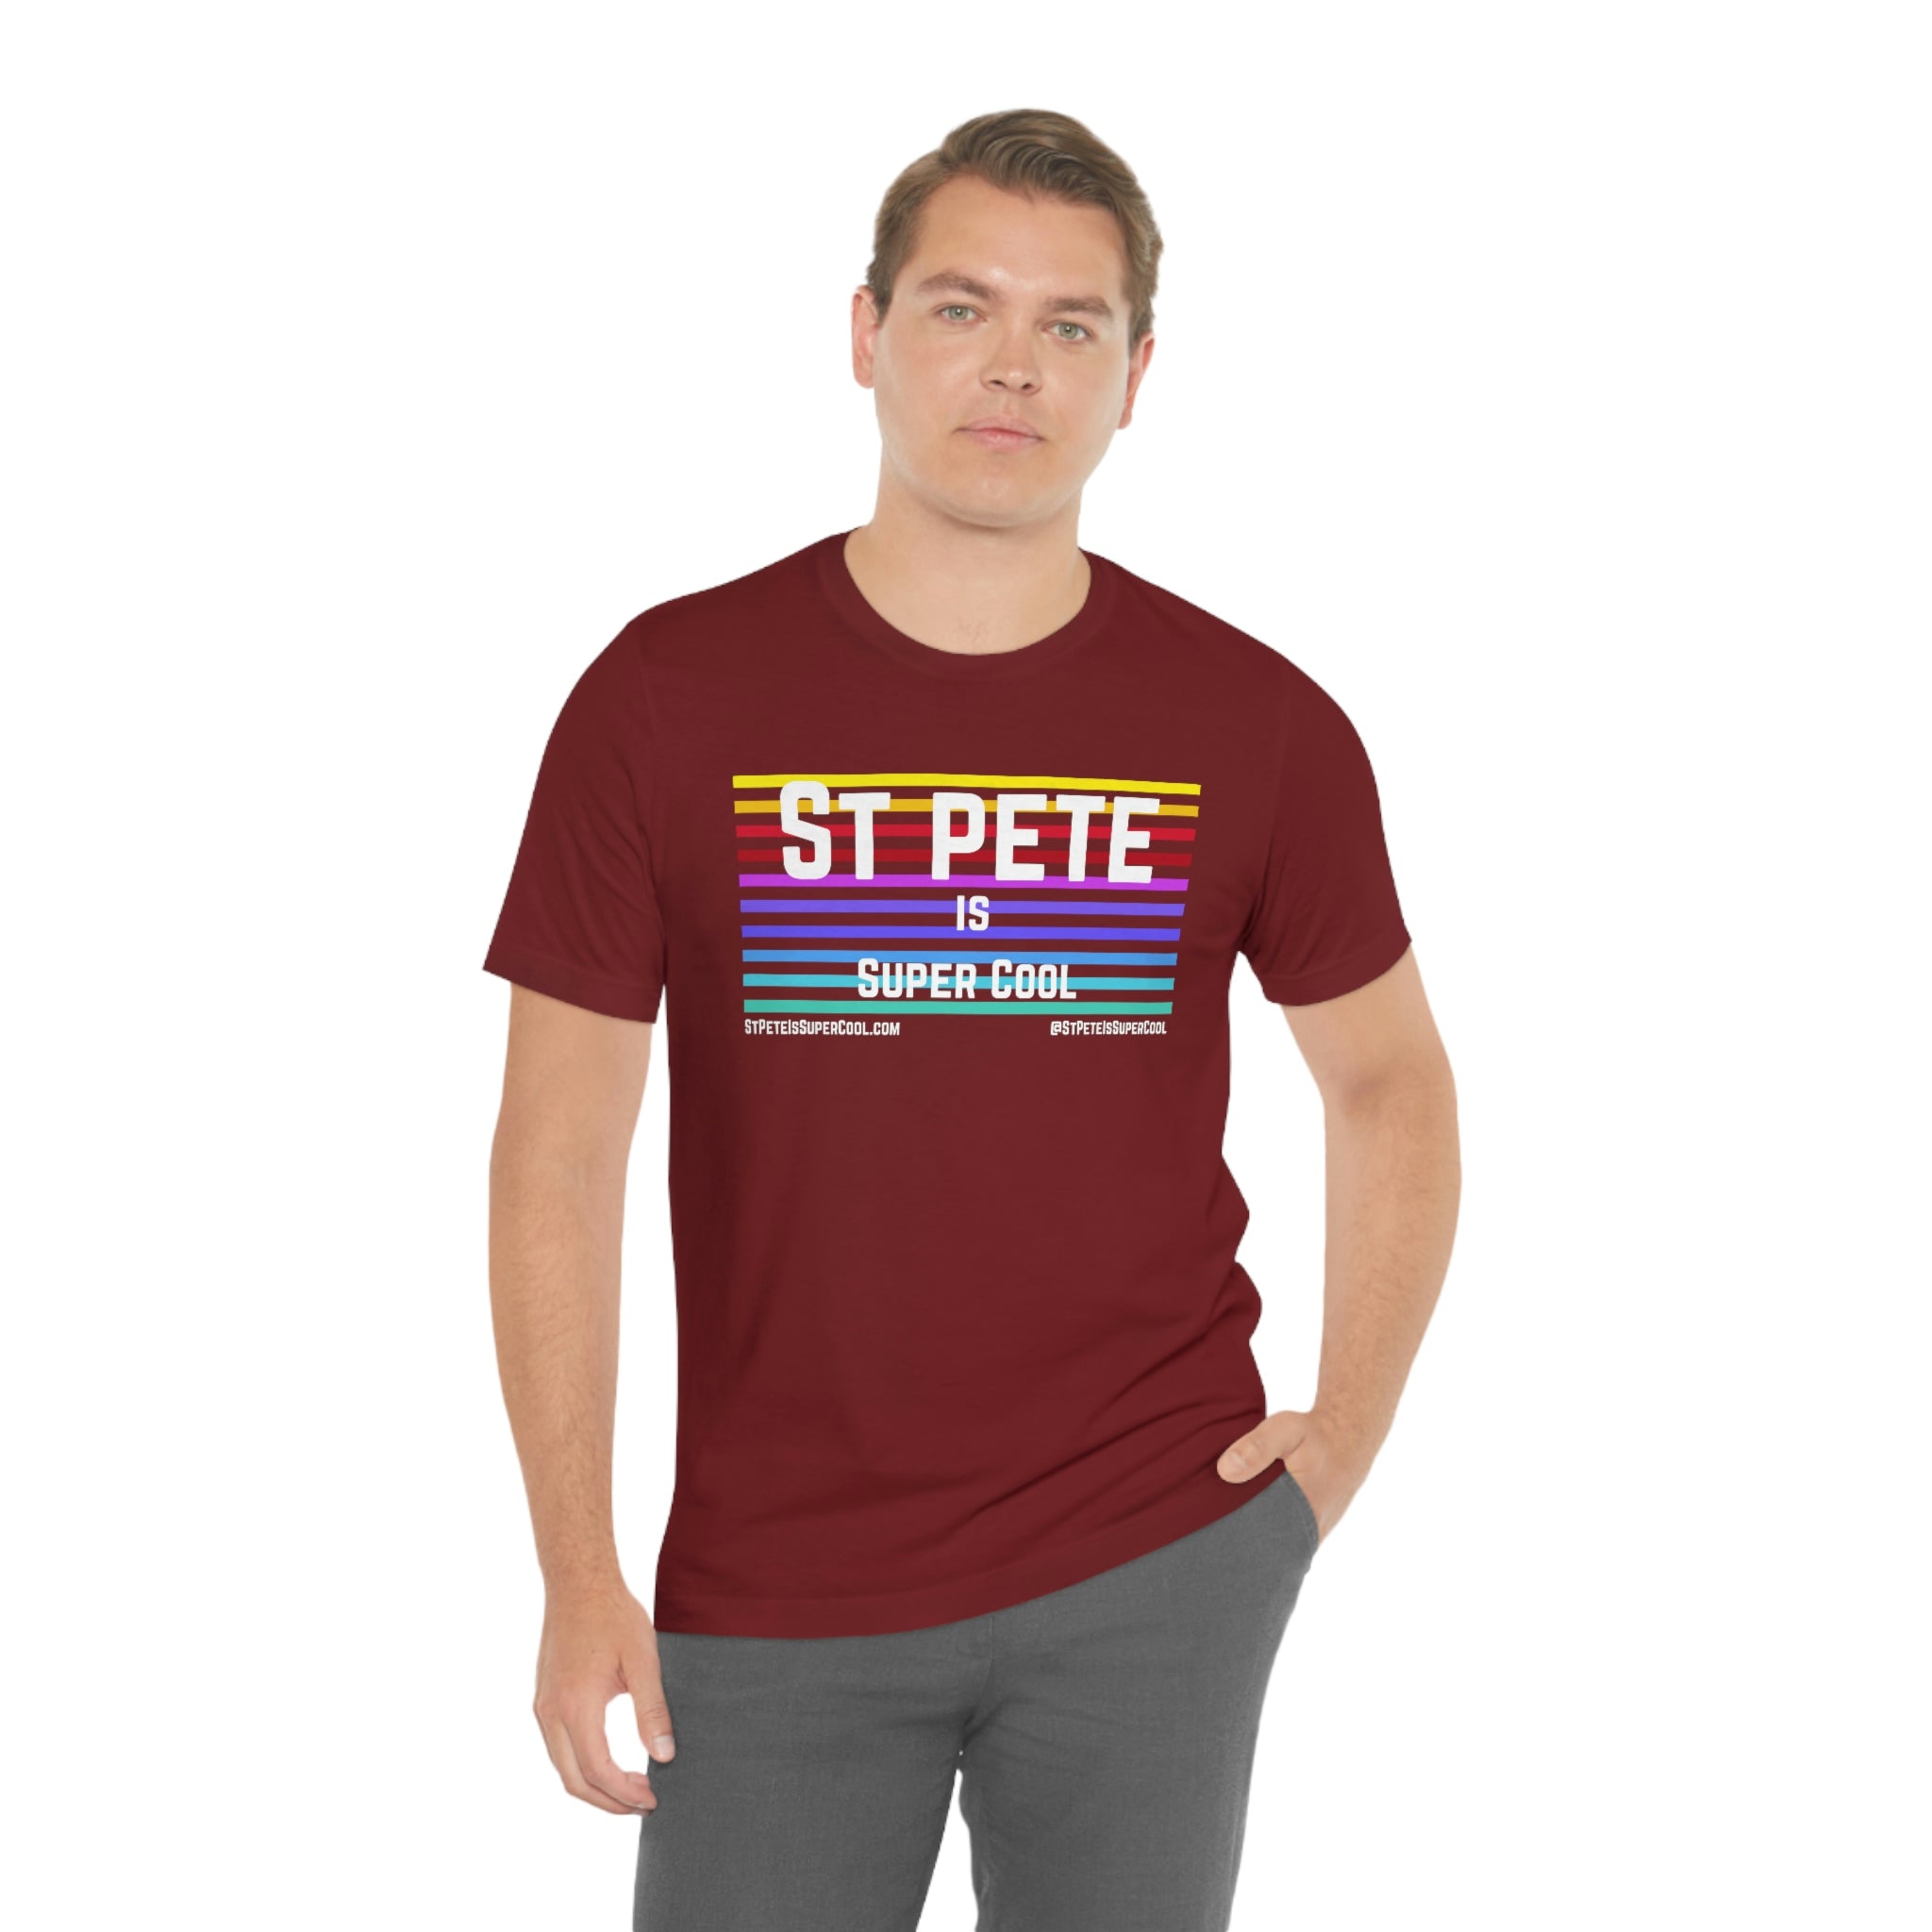 "Prideful St Pete" Tee